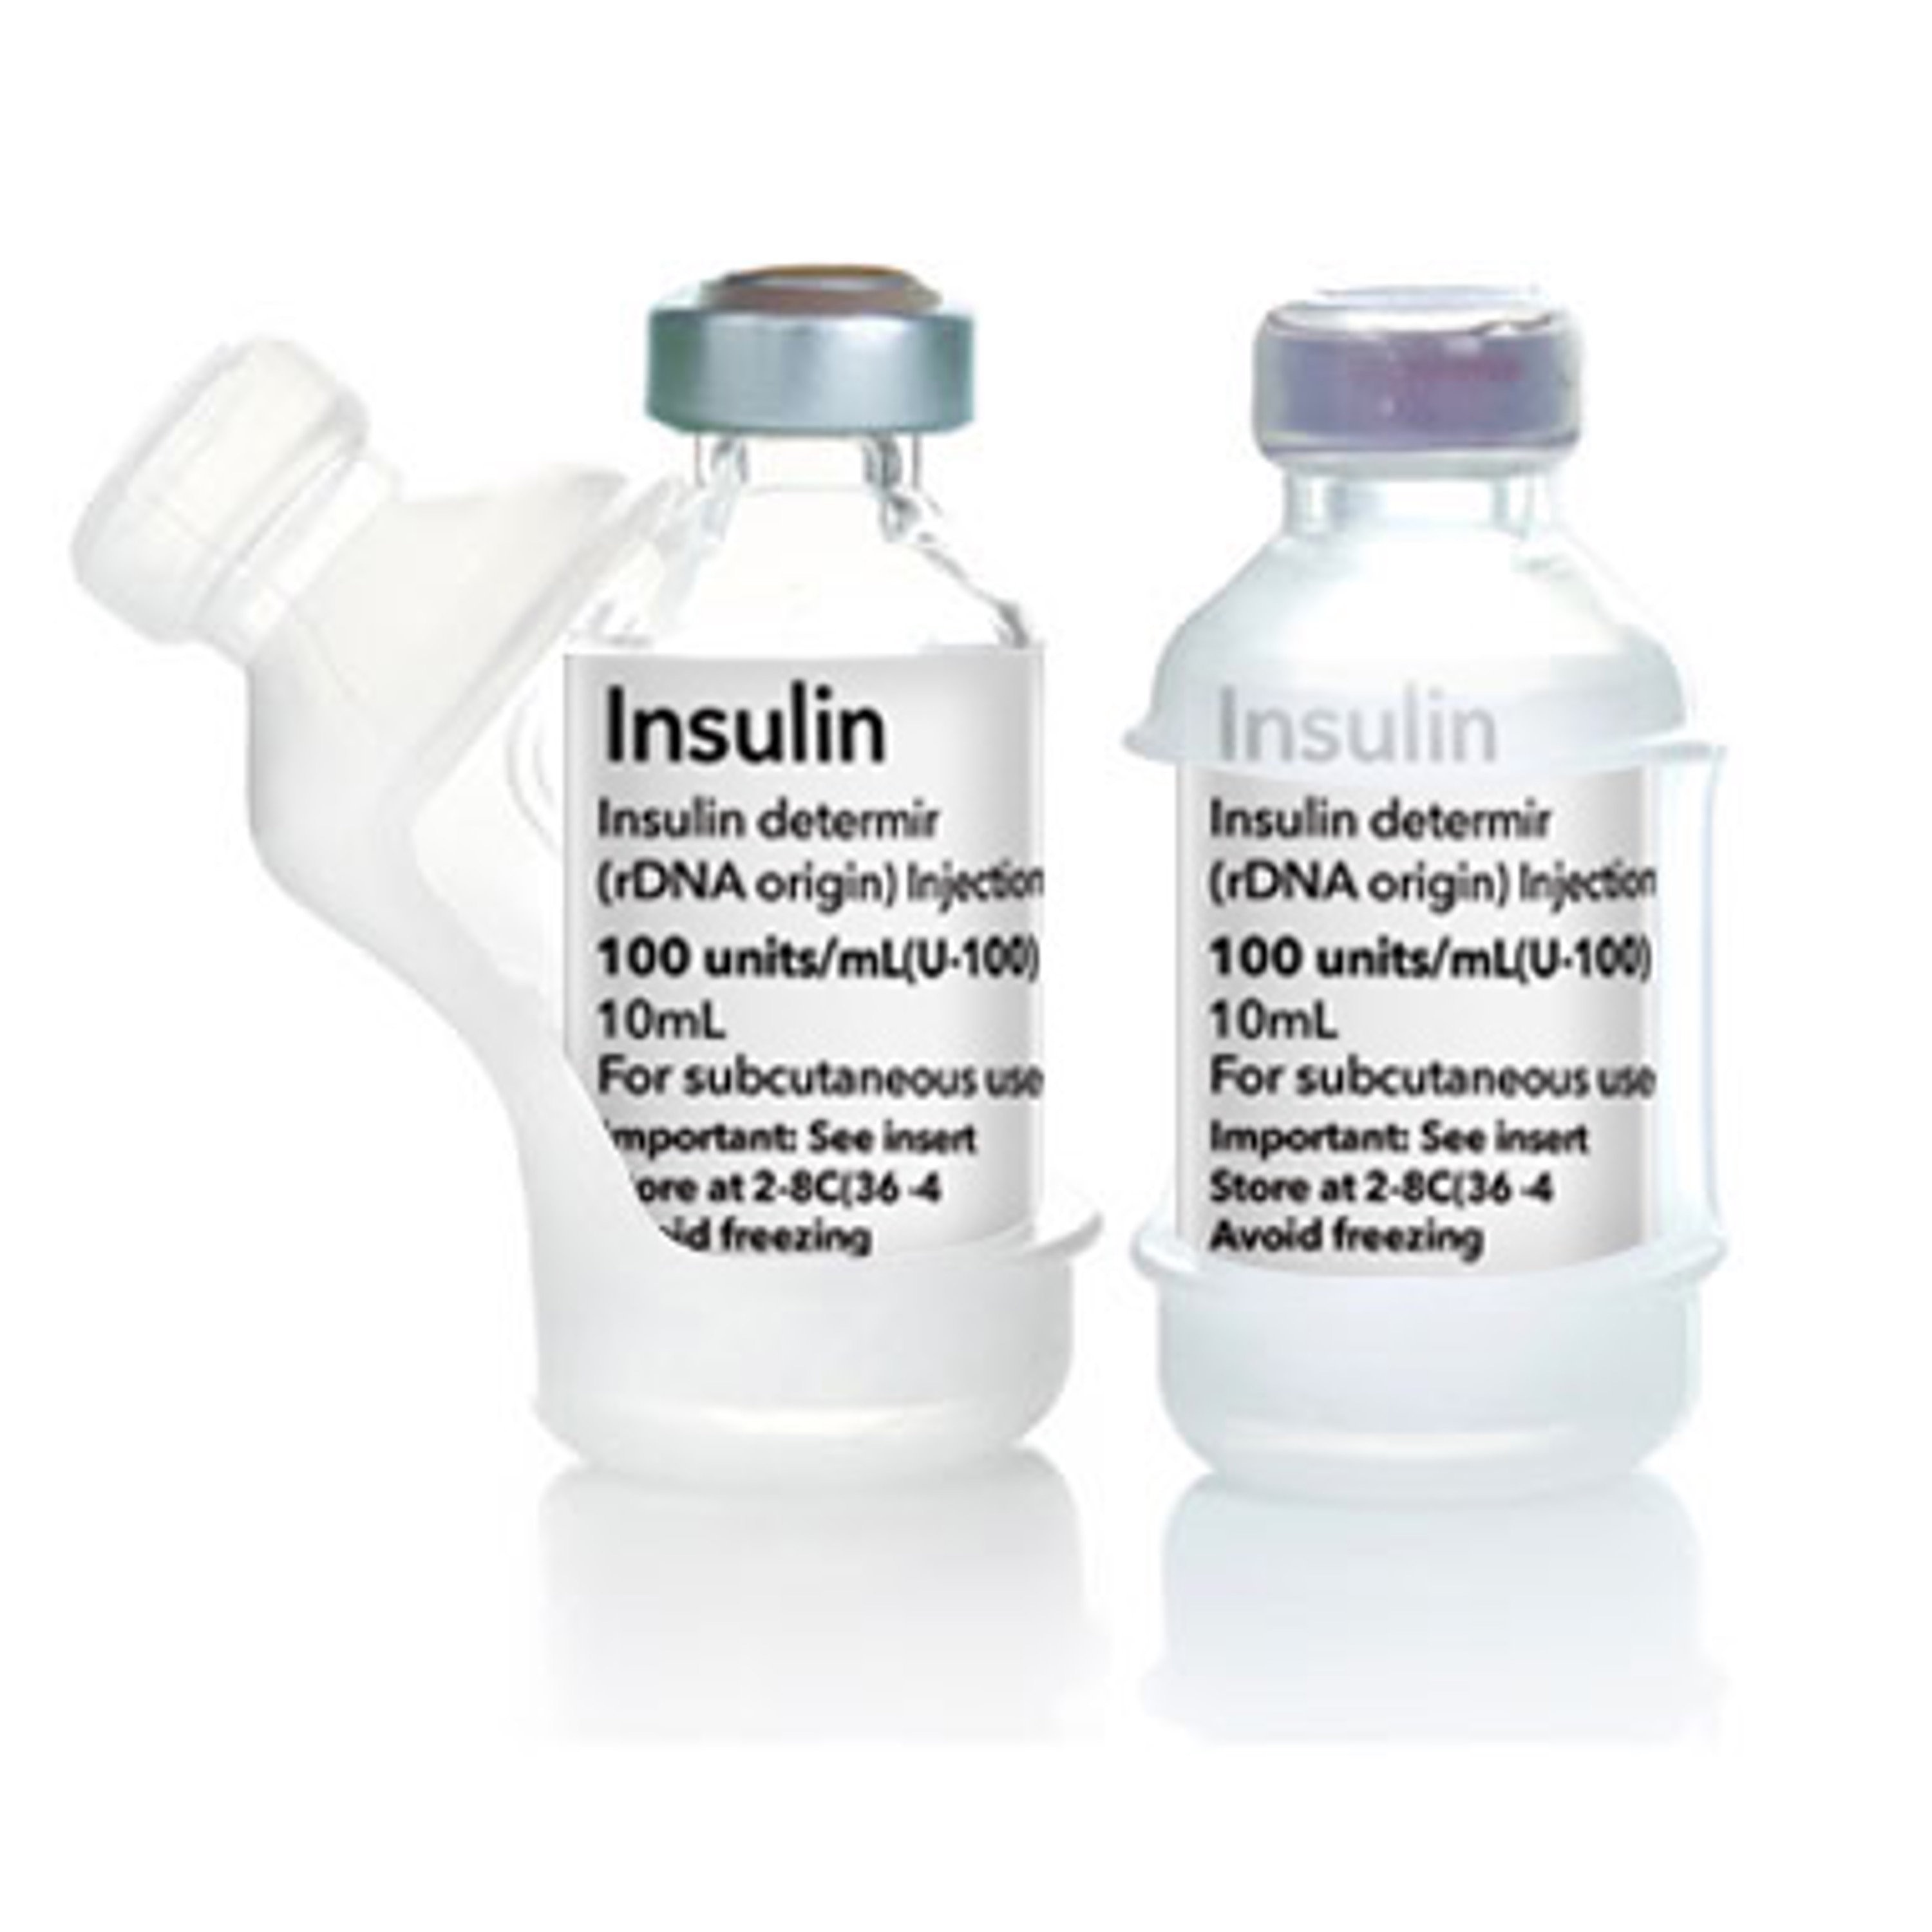 T1-me Vial Syringe Support Omnipod Insulin Type1 diabetes Vial holder – T1me